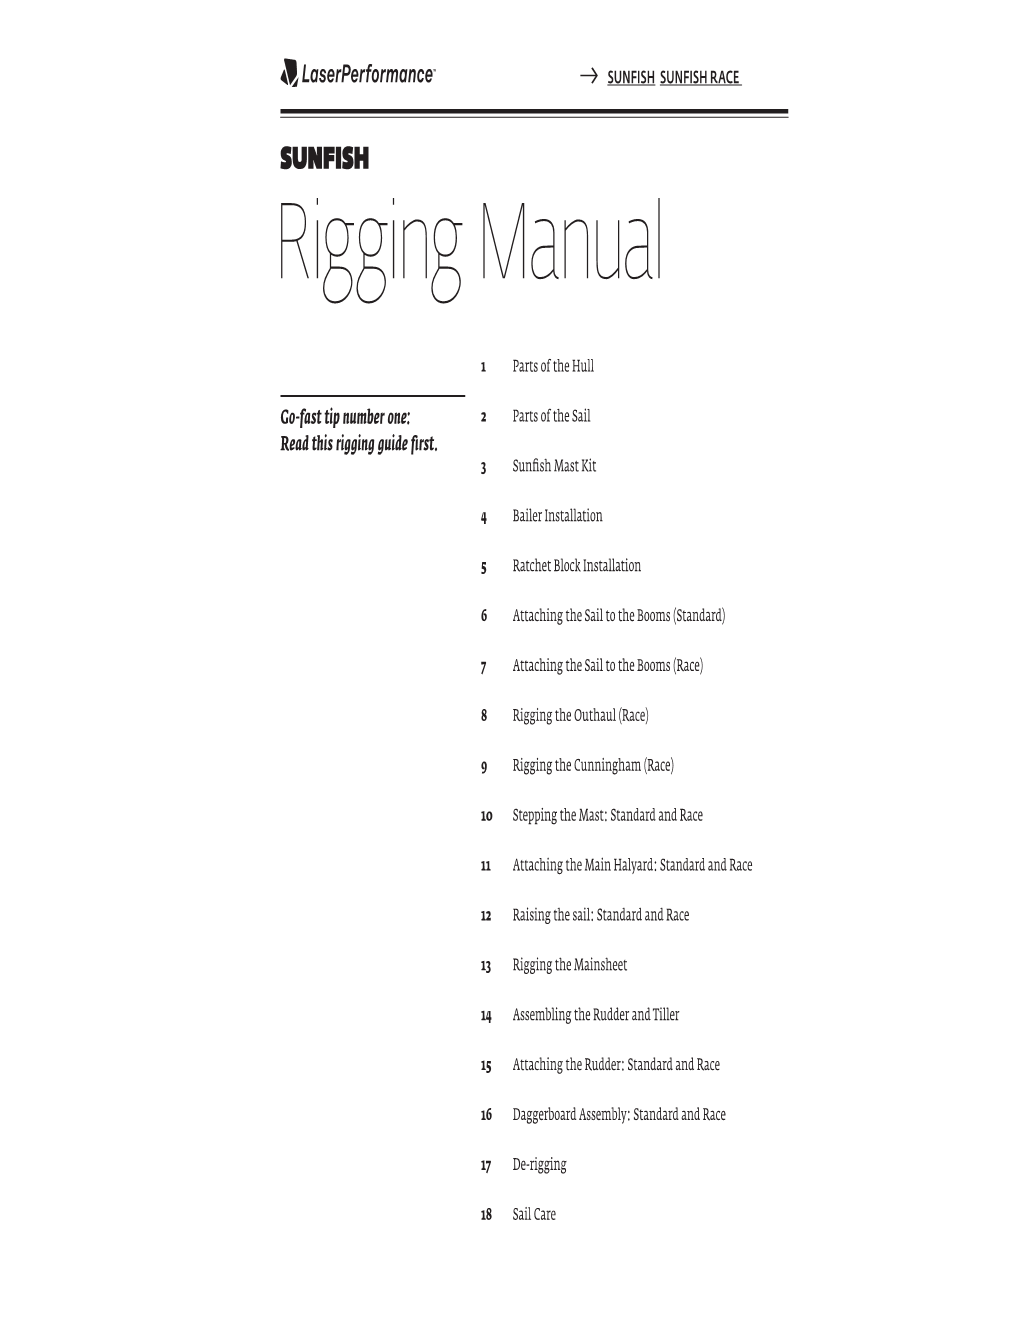 Rigging Manual